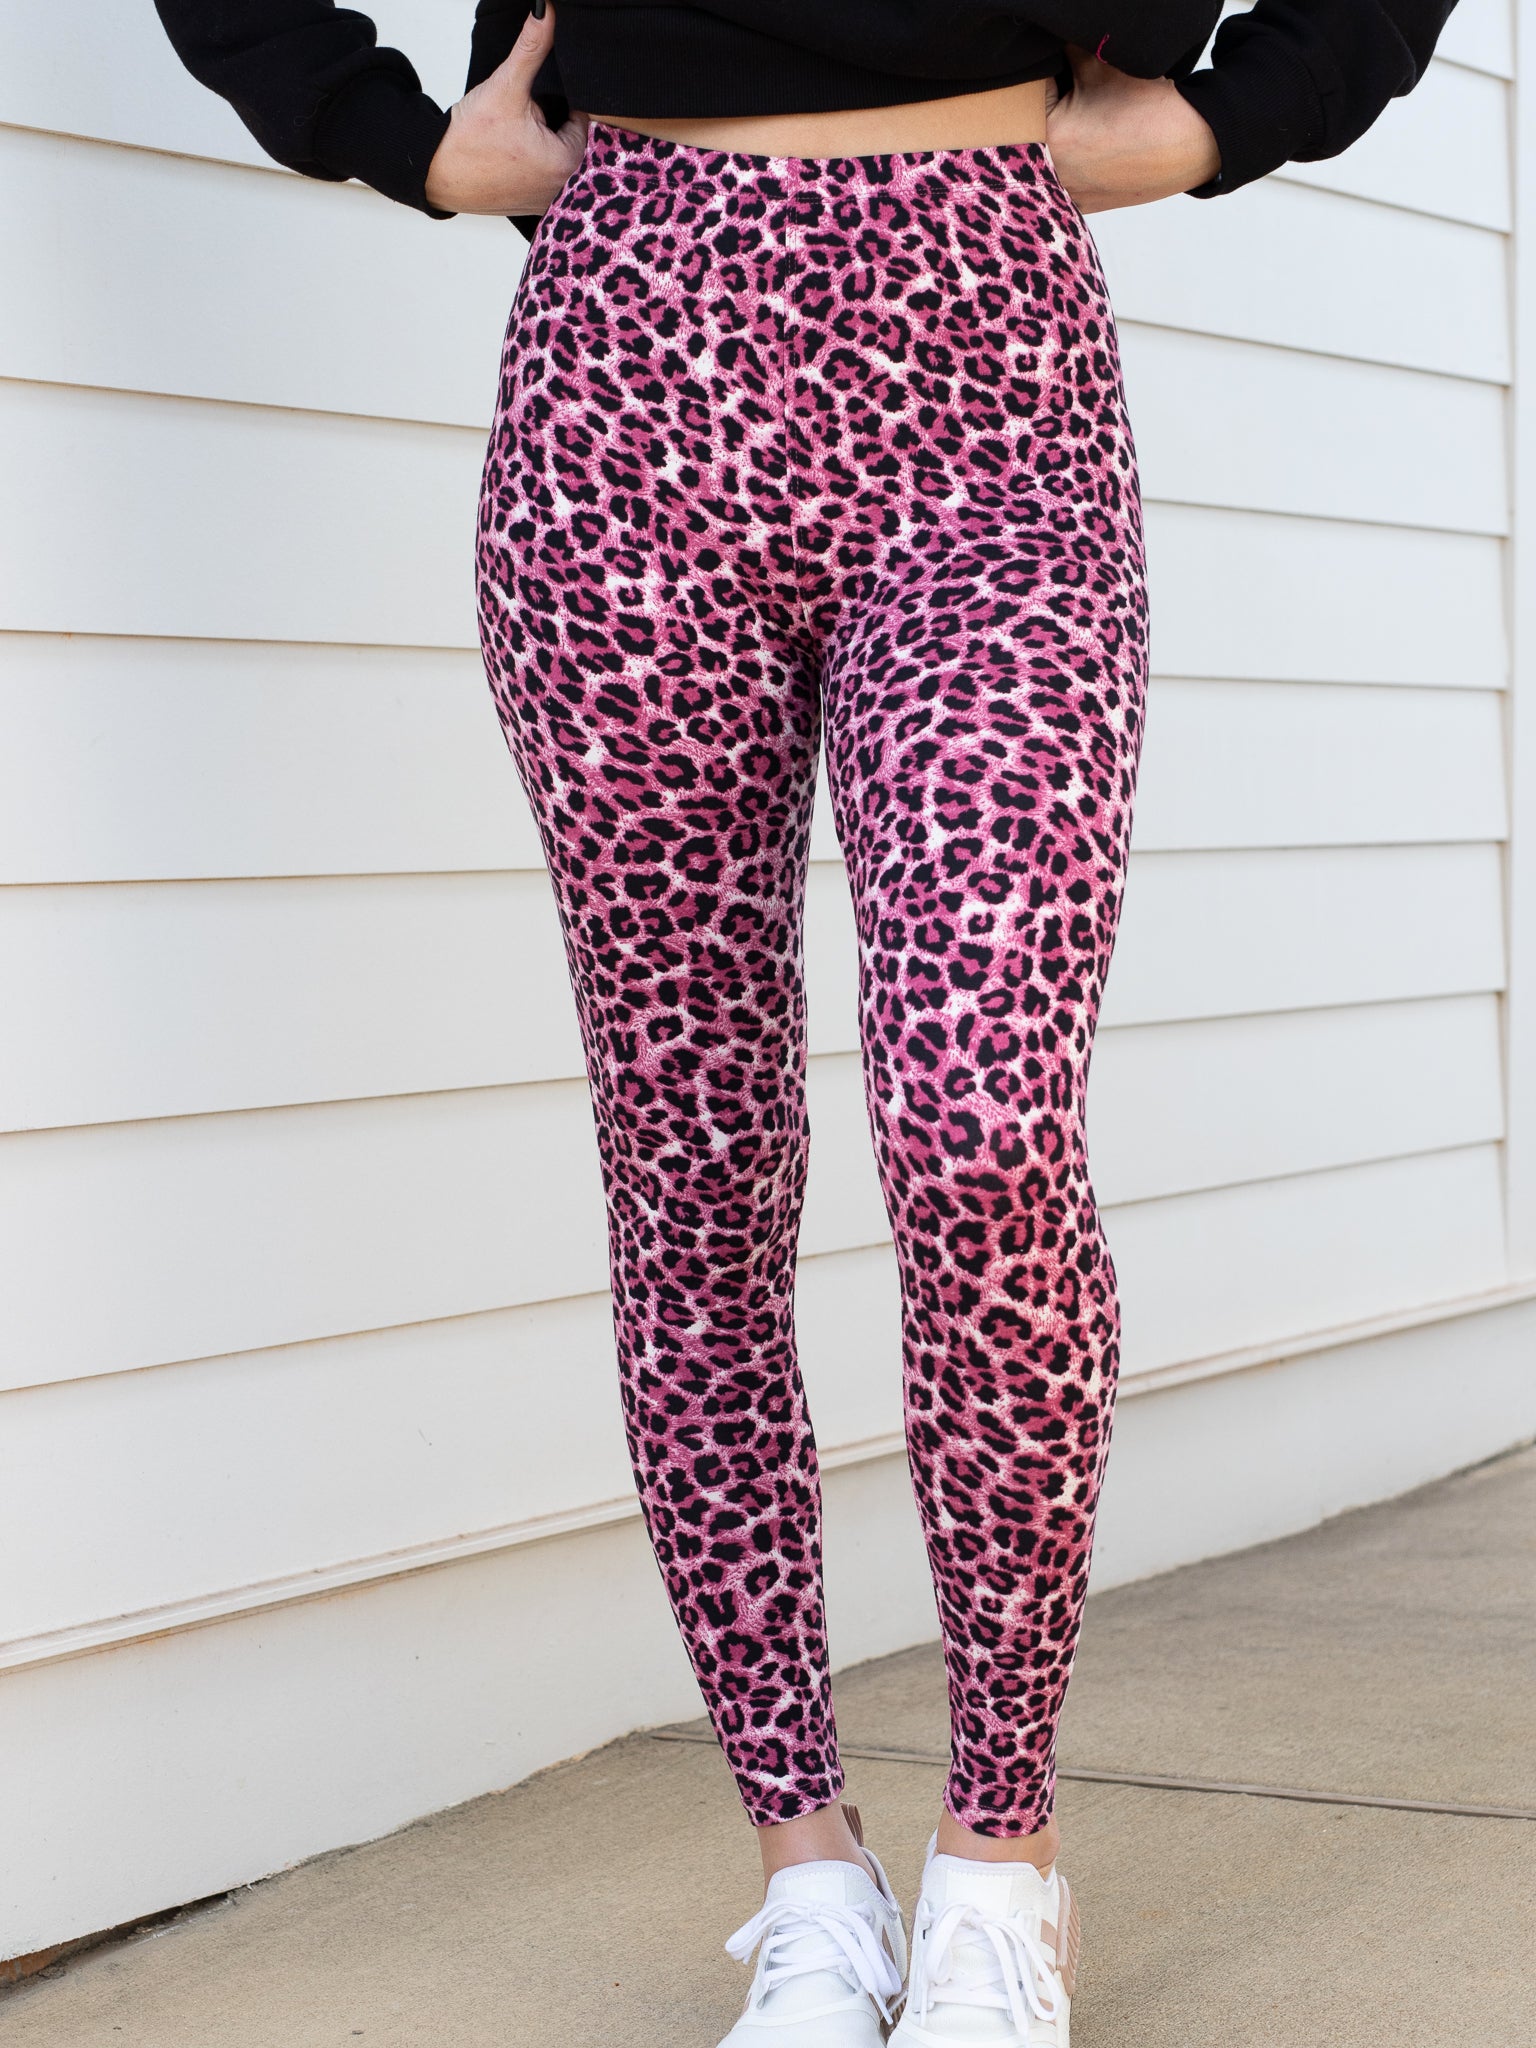 Basic Leggings  Basic leggings, Cheetah print leggings, Pants for